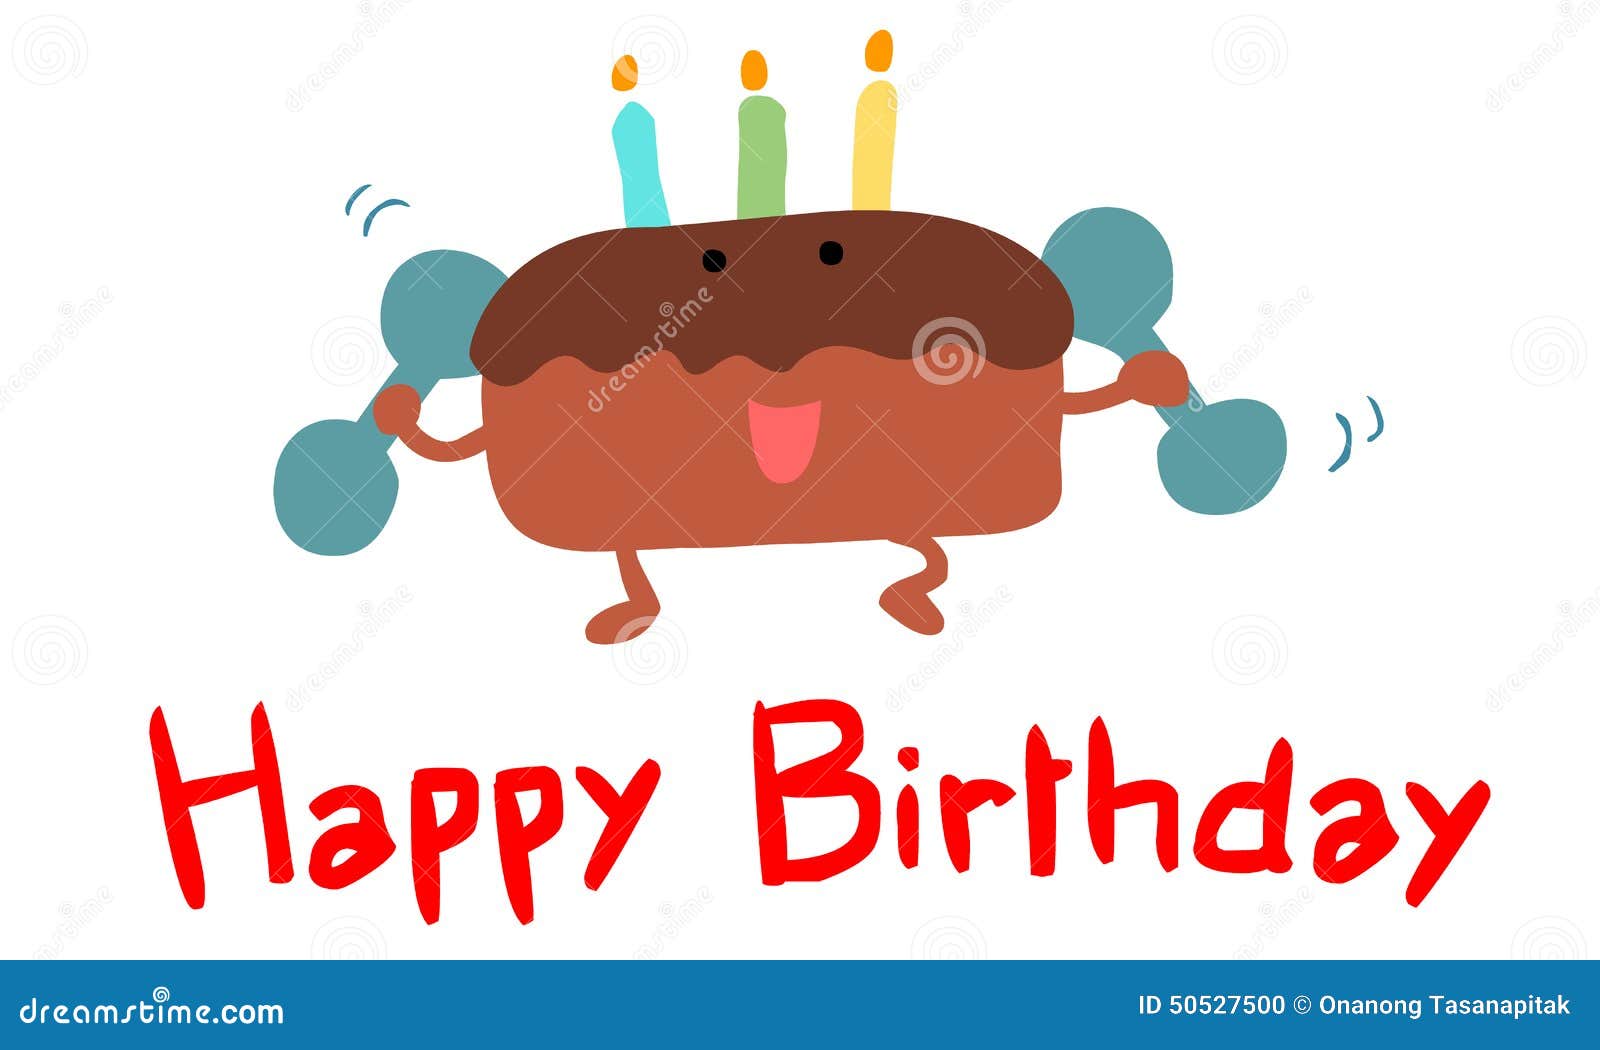 happy-birthday-cake-playing-fitness-card-illustration-50527500.jpg